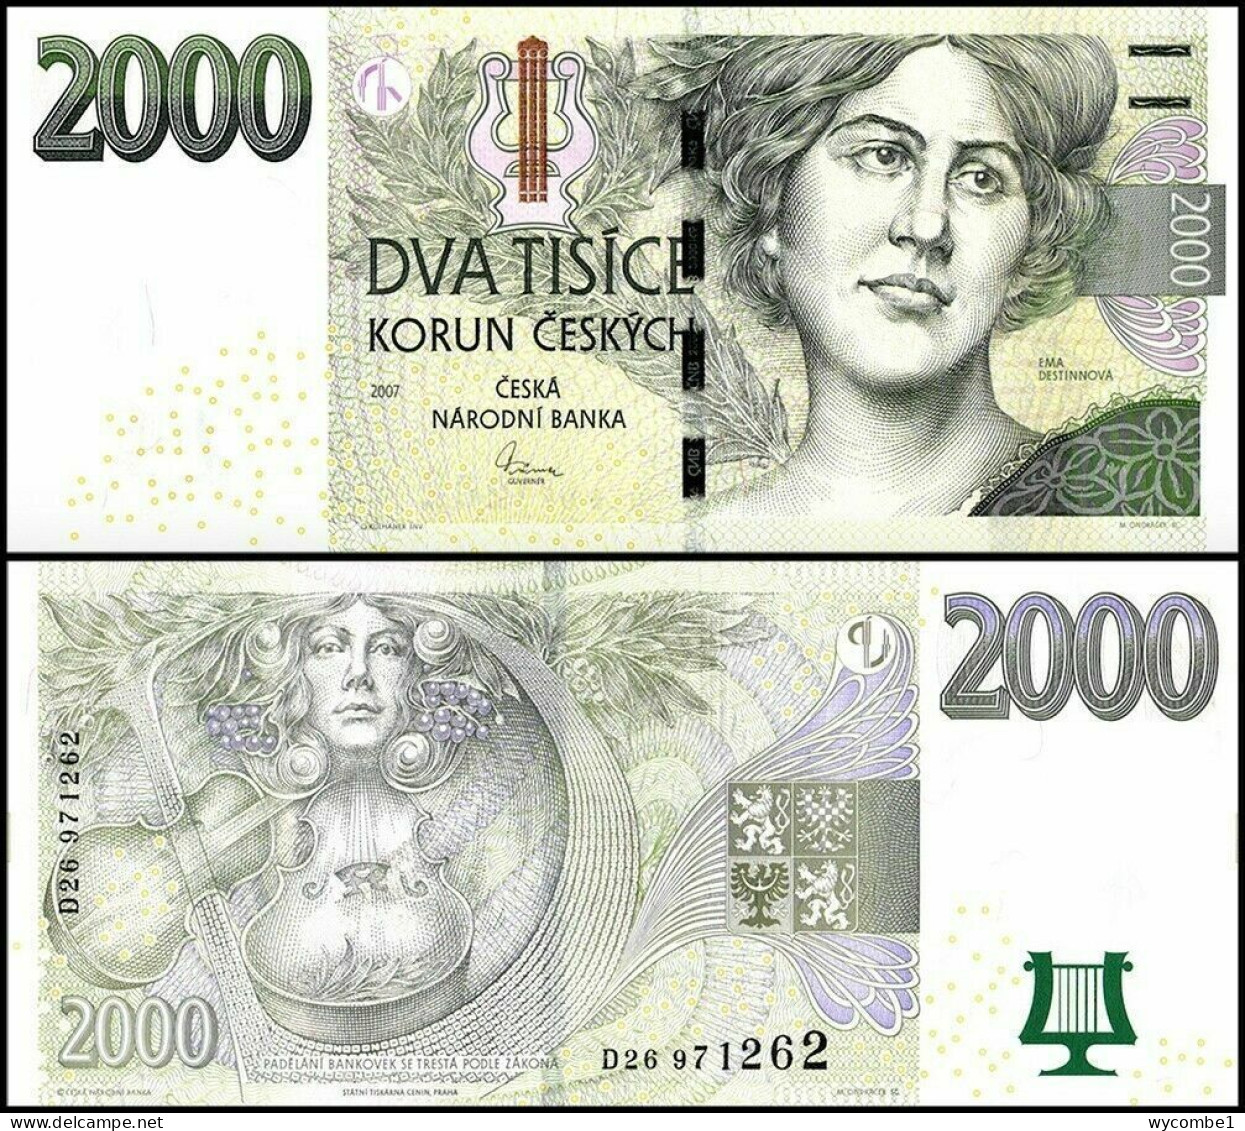 CZECH REPUBLIC - 2007 2000 Korun UNC Banknote - Czech Republic